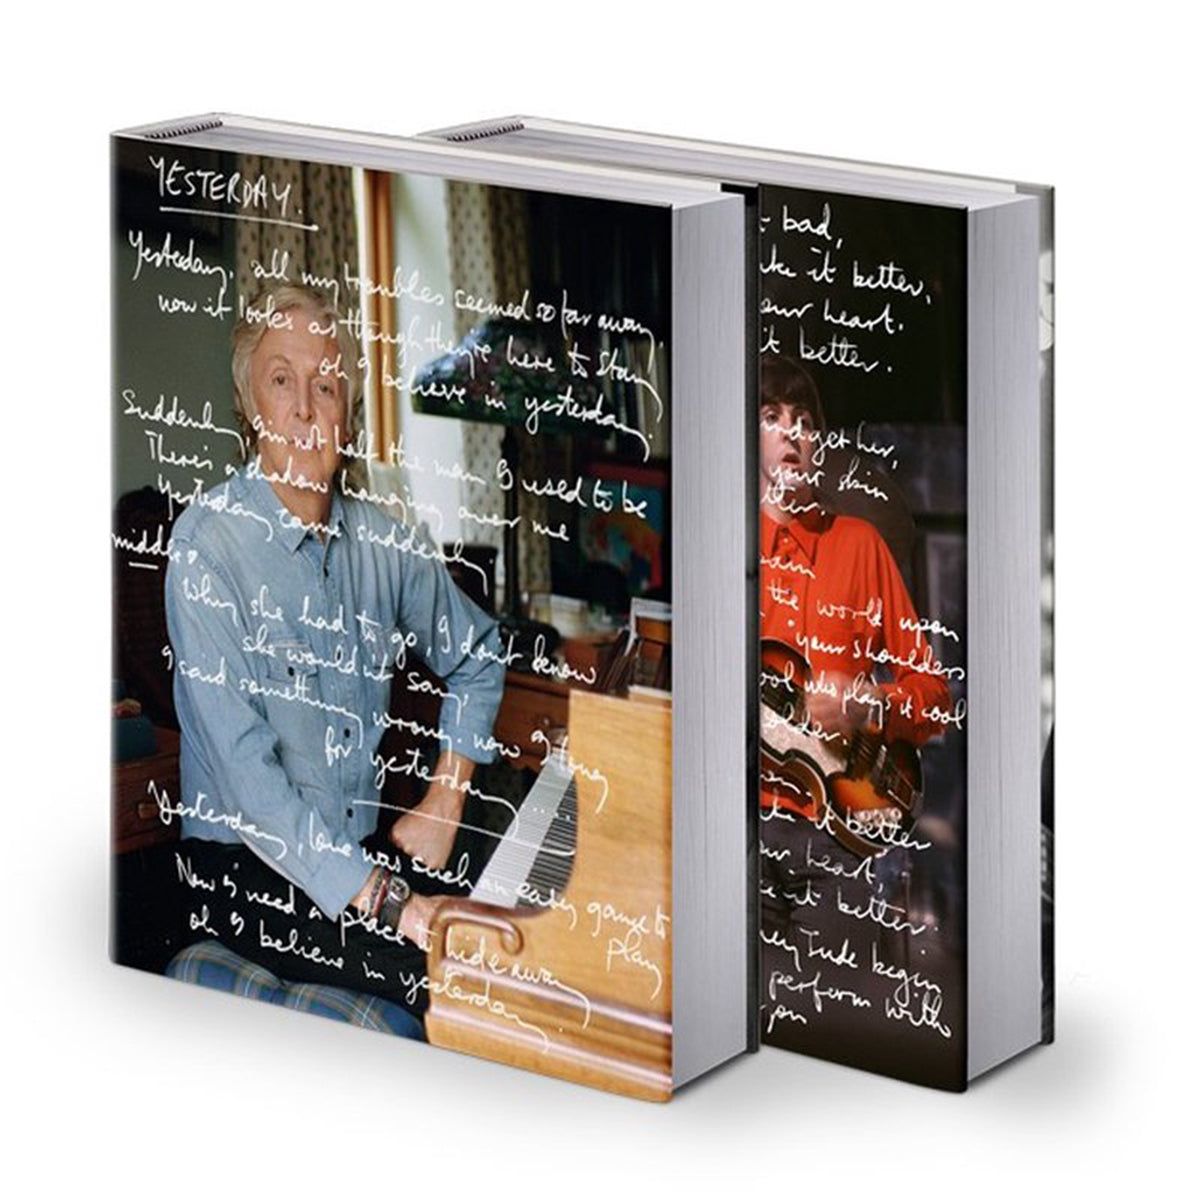 Paul McCartney De lyrics Van 1956 tot nu Nederlandse editie Table Book